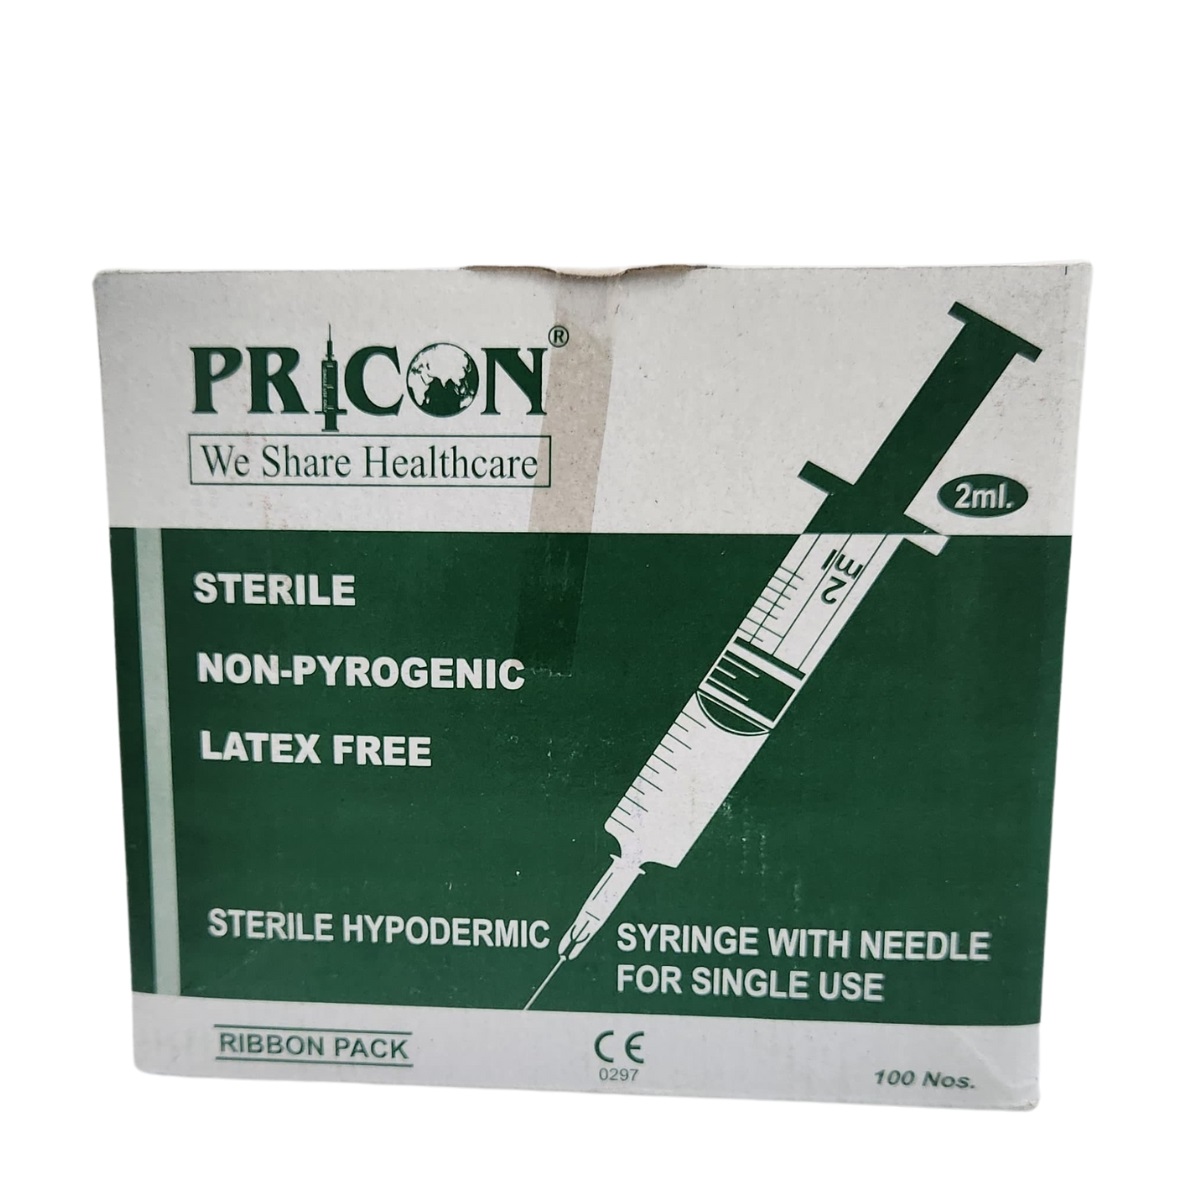 Pricon 2ml Syringe With Needle - 100 Units Pack